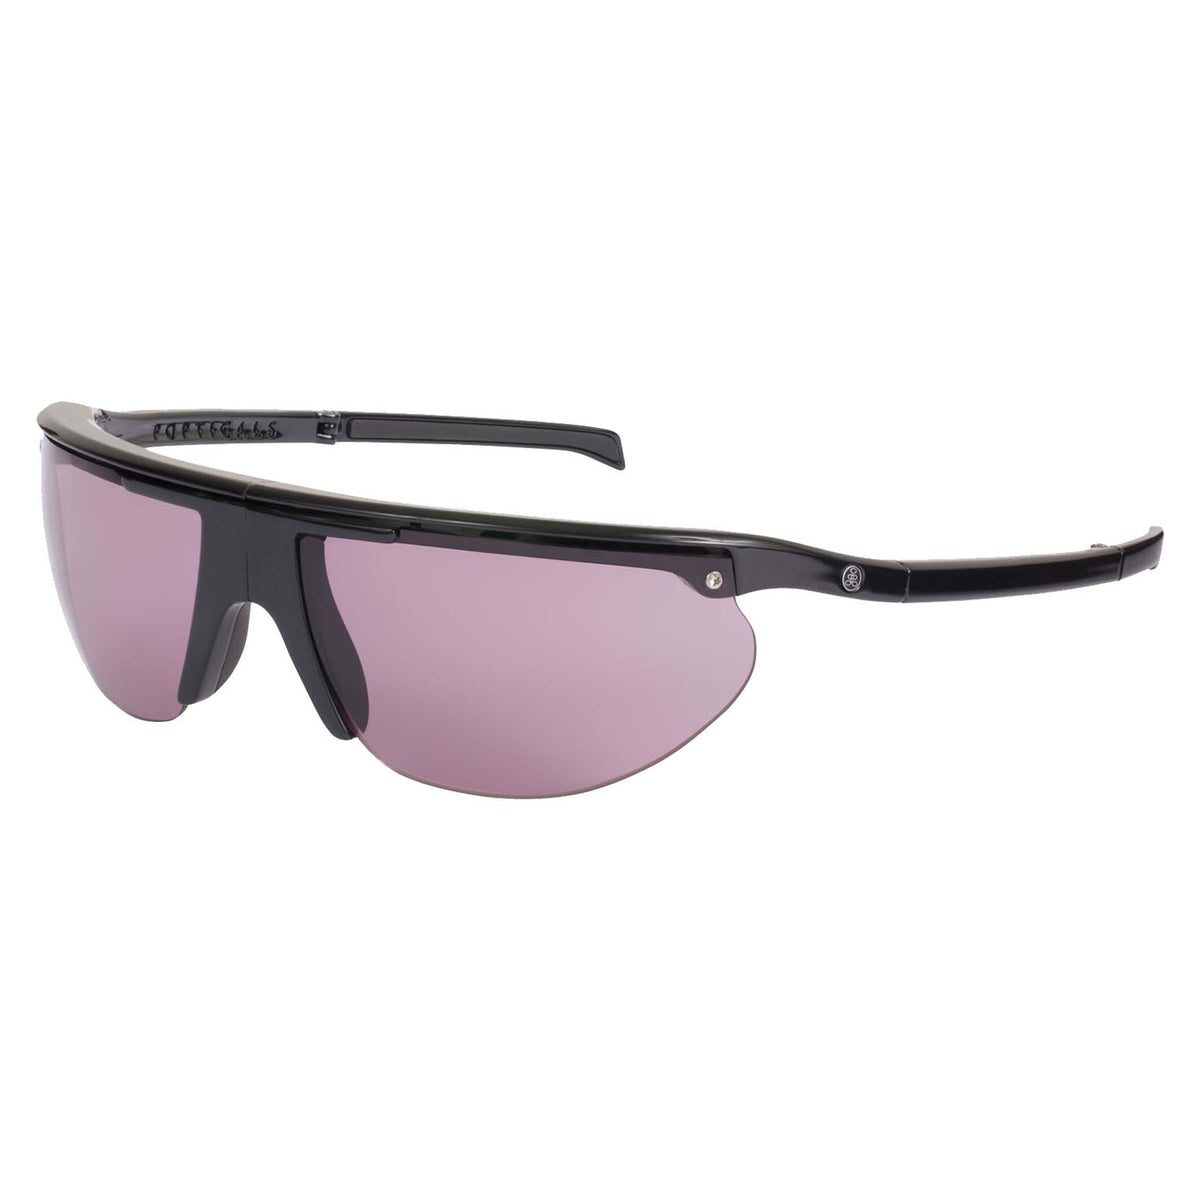 Popticals, Premium Compact Sunglasses, PopTrail, 200081-BGVS, Standard Golf Sunglasses, Gloss Black Frame, Violet Golf Lenses, Glam View